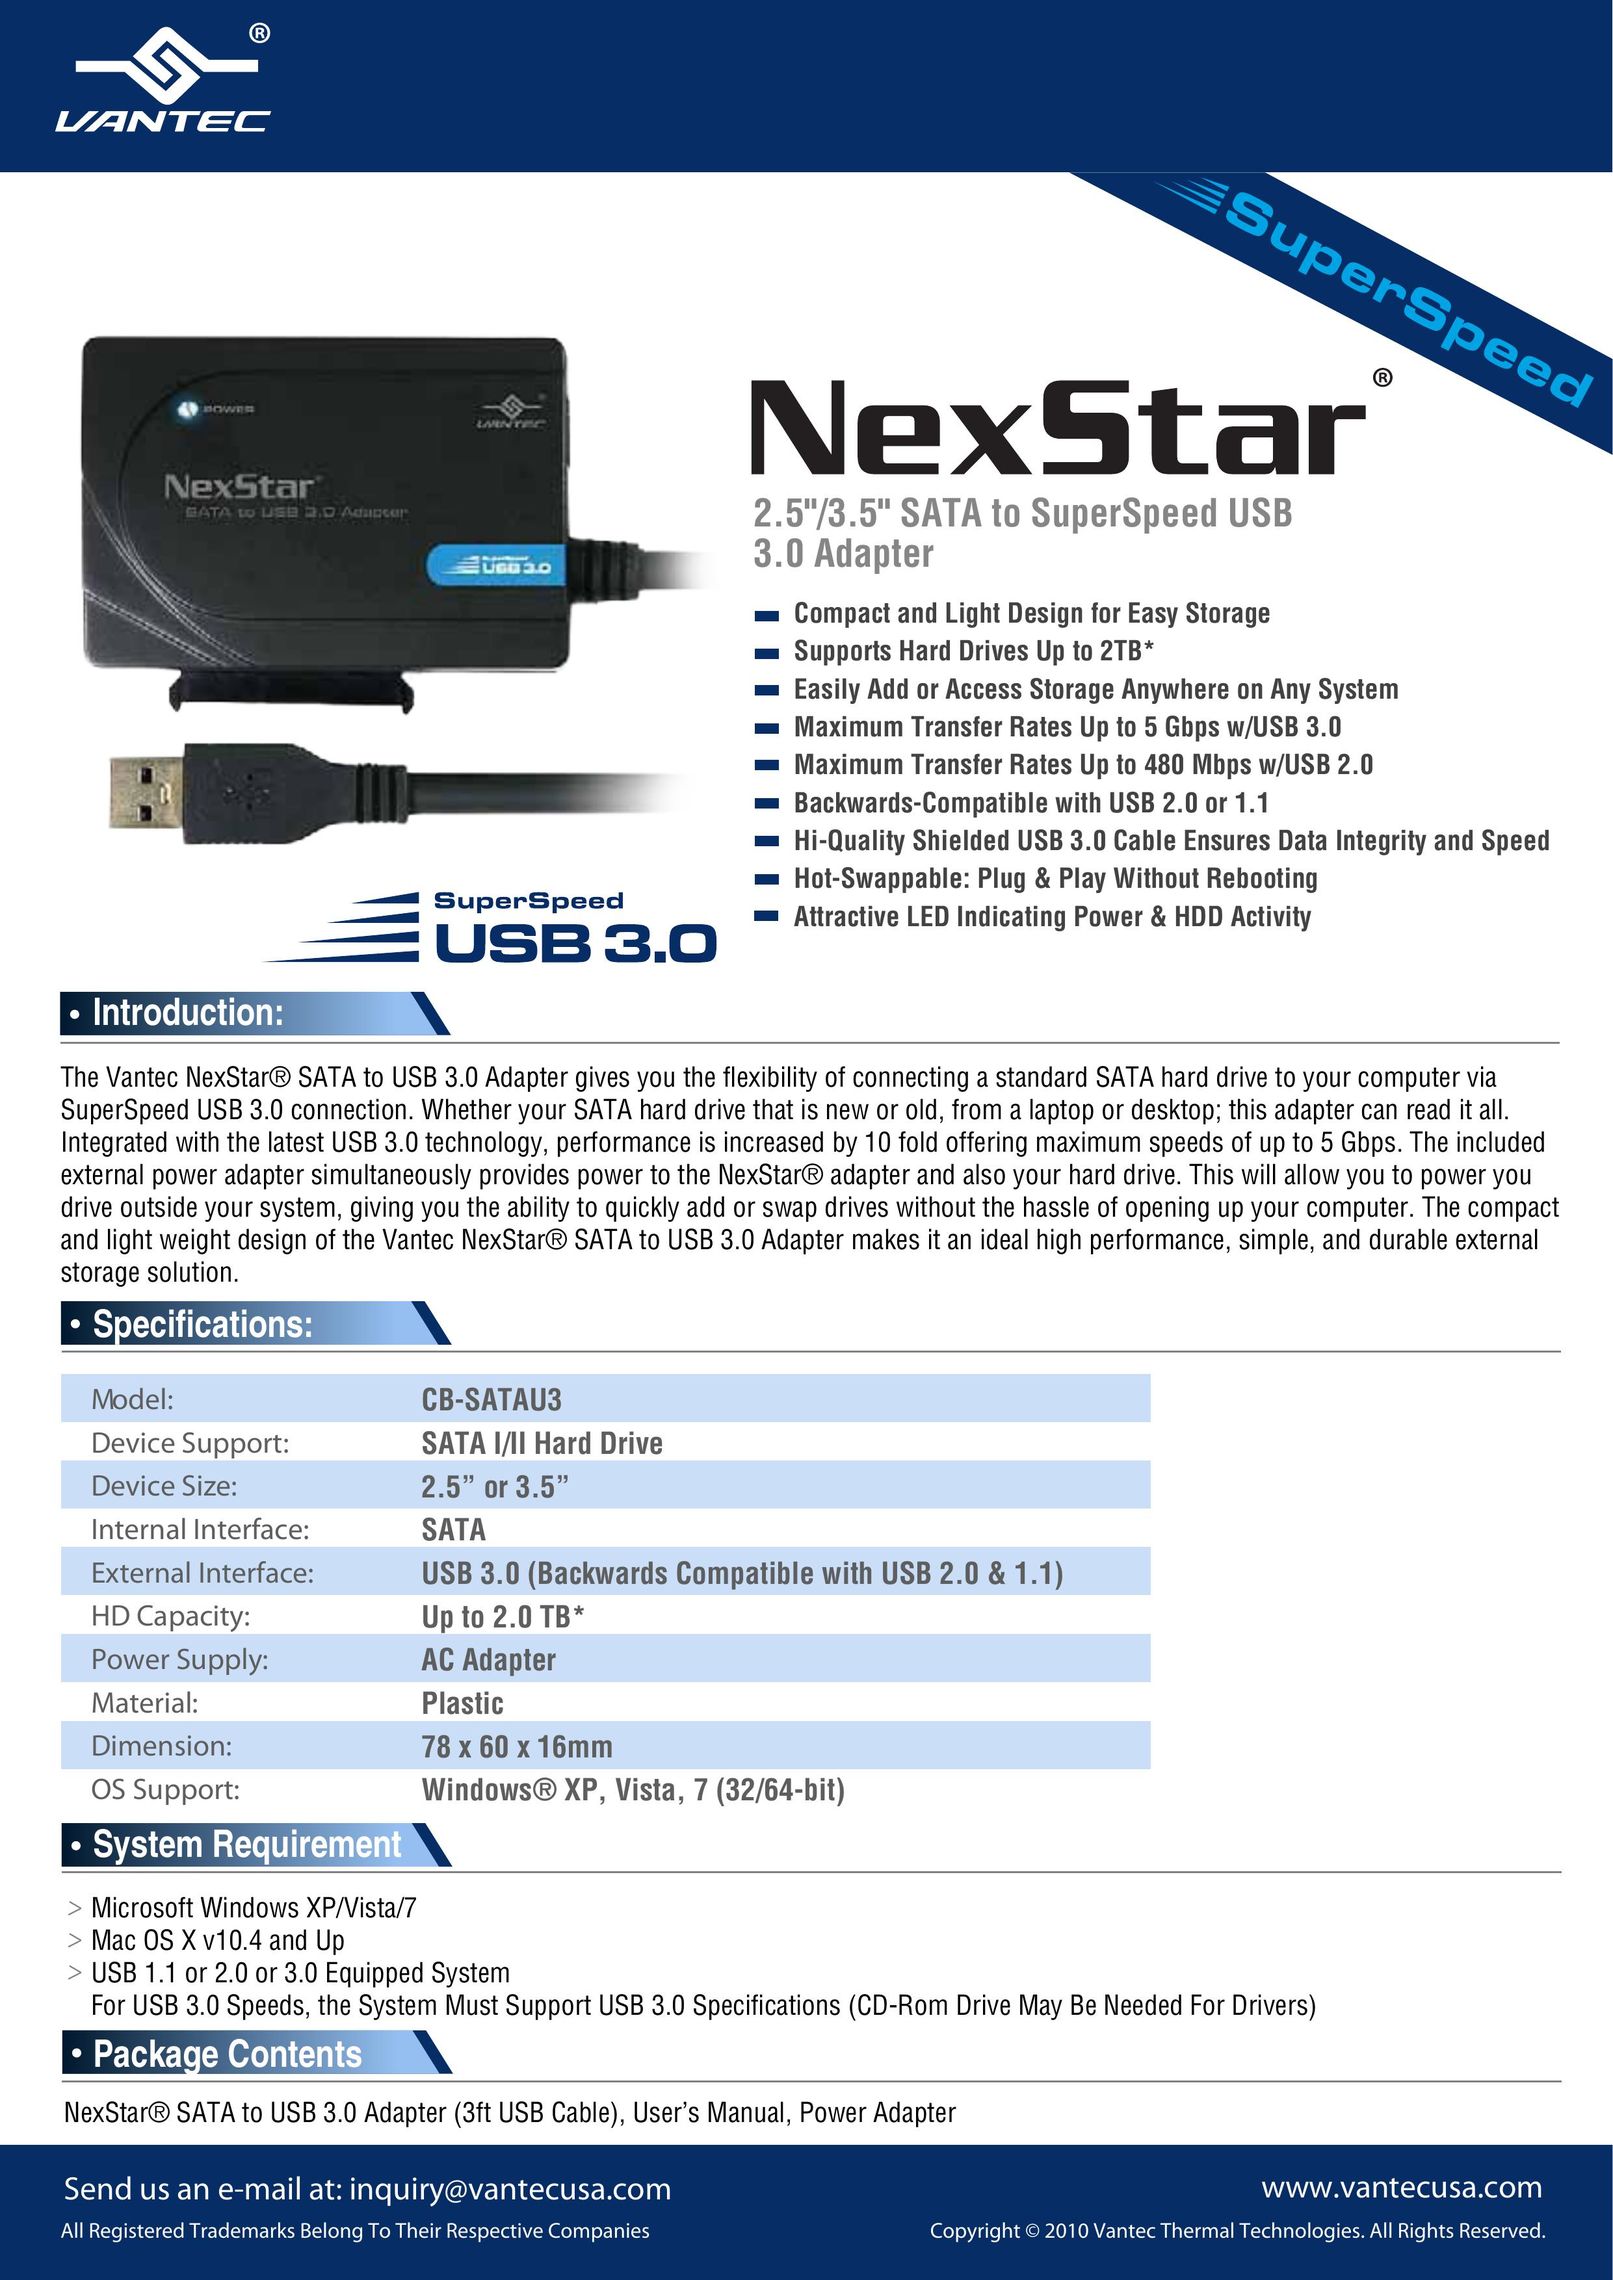 Nexstar CB-SATAU3 Computer Drive User Manual